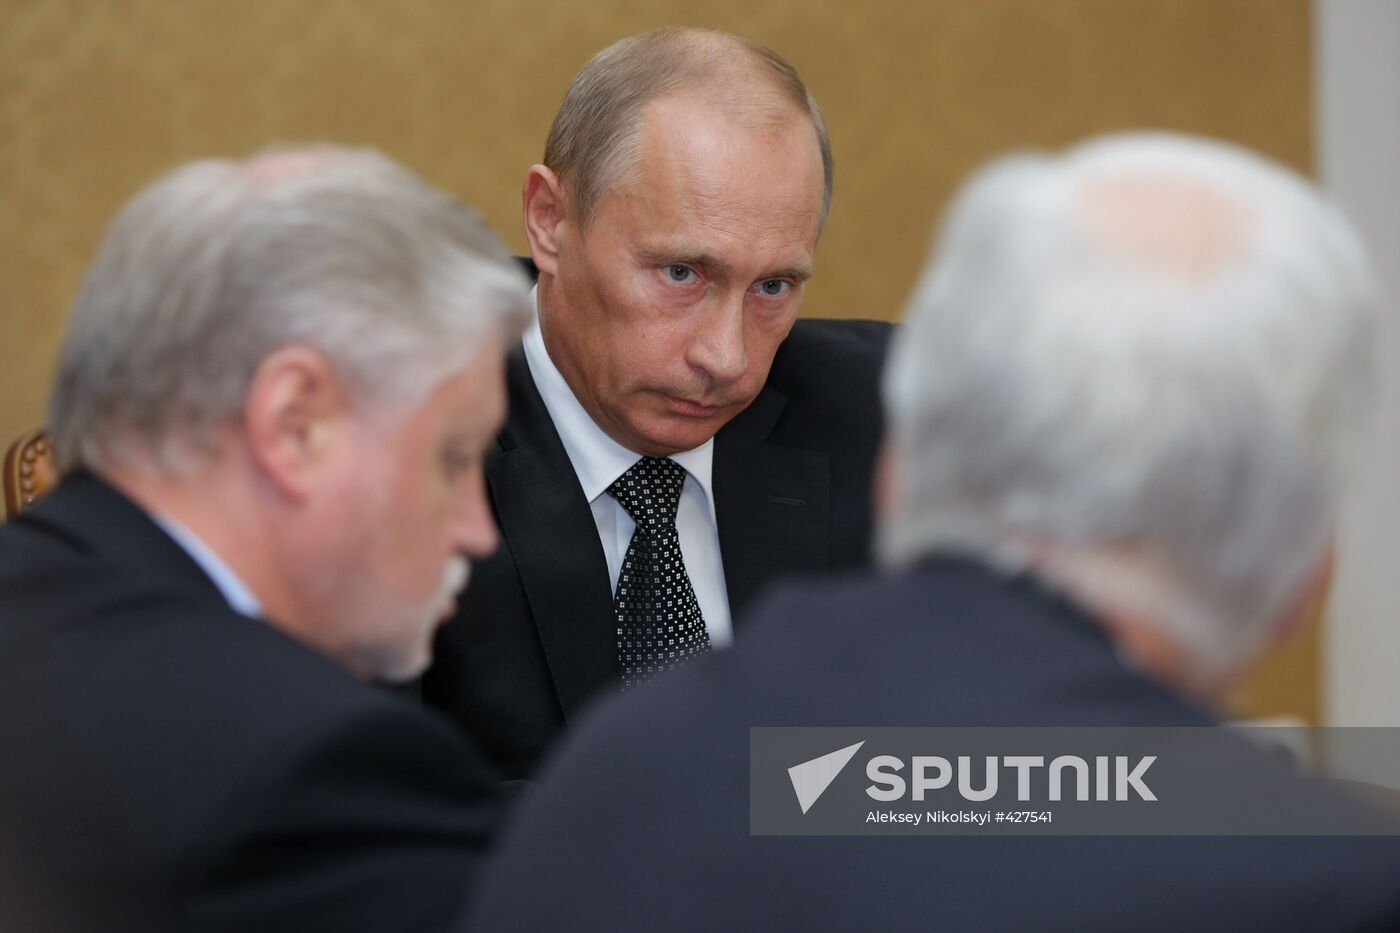 Russian Prime Minister Vladimir Putin chairs meeting